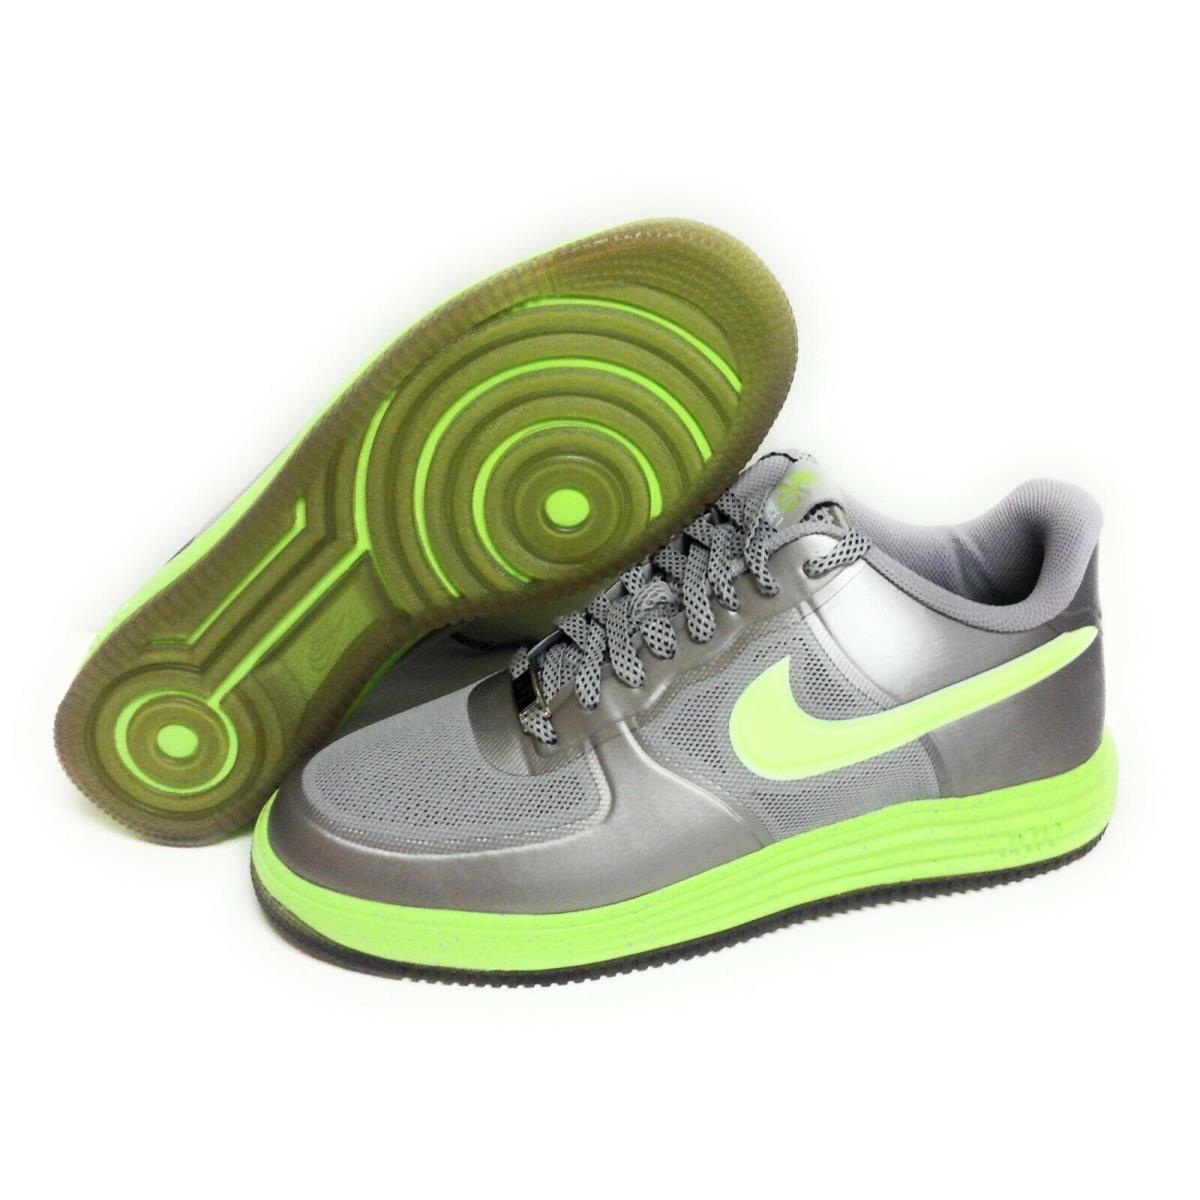 Mens Nike Lunar Force 1 Fuse 555027 002 Granite Grey Volt 2012 Sneakers Shoes - Grey , Granite Manufacturer